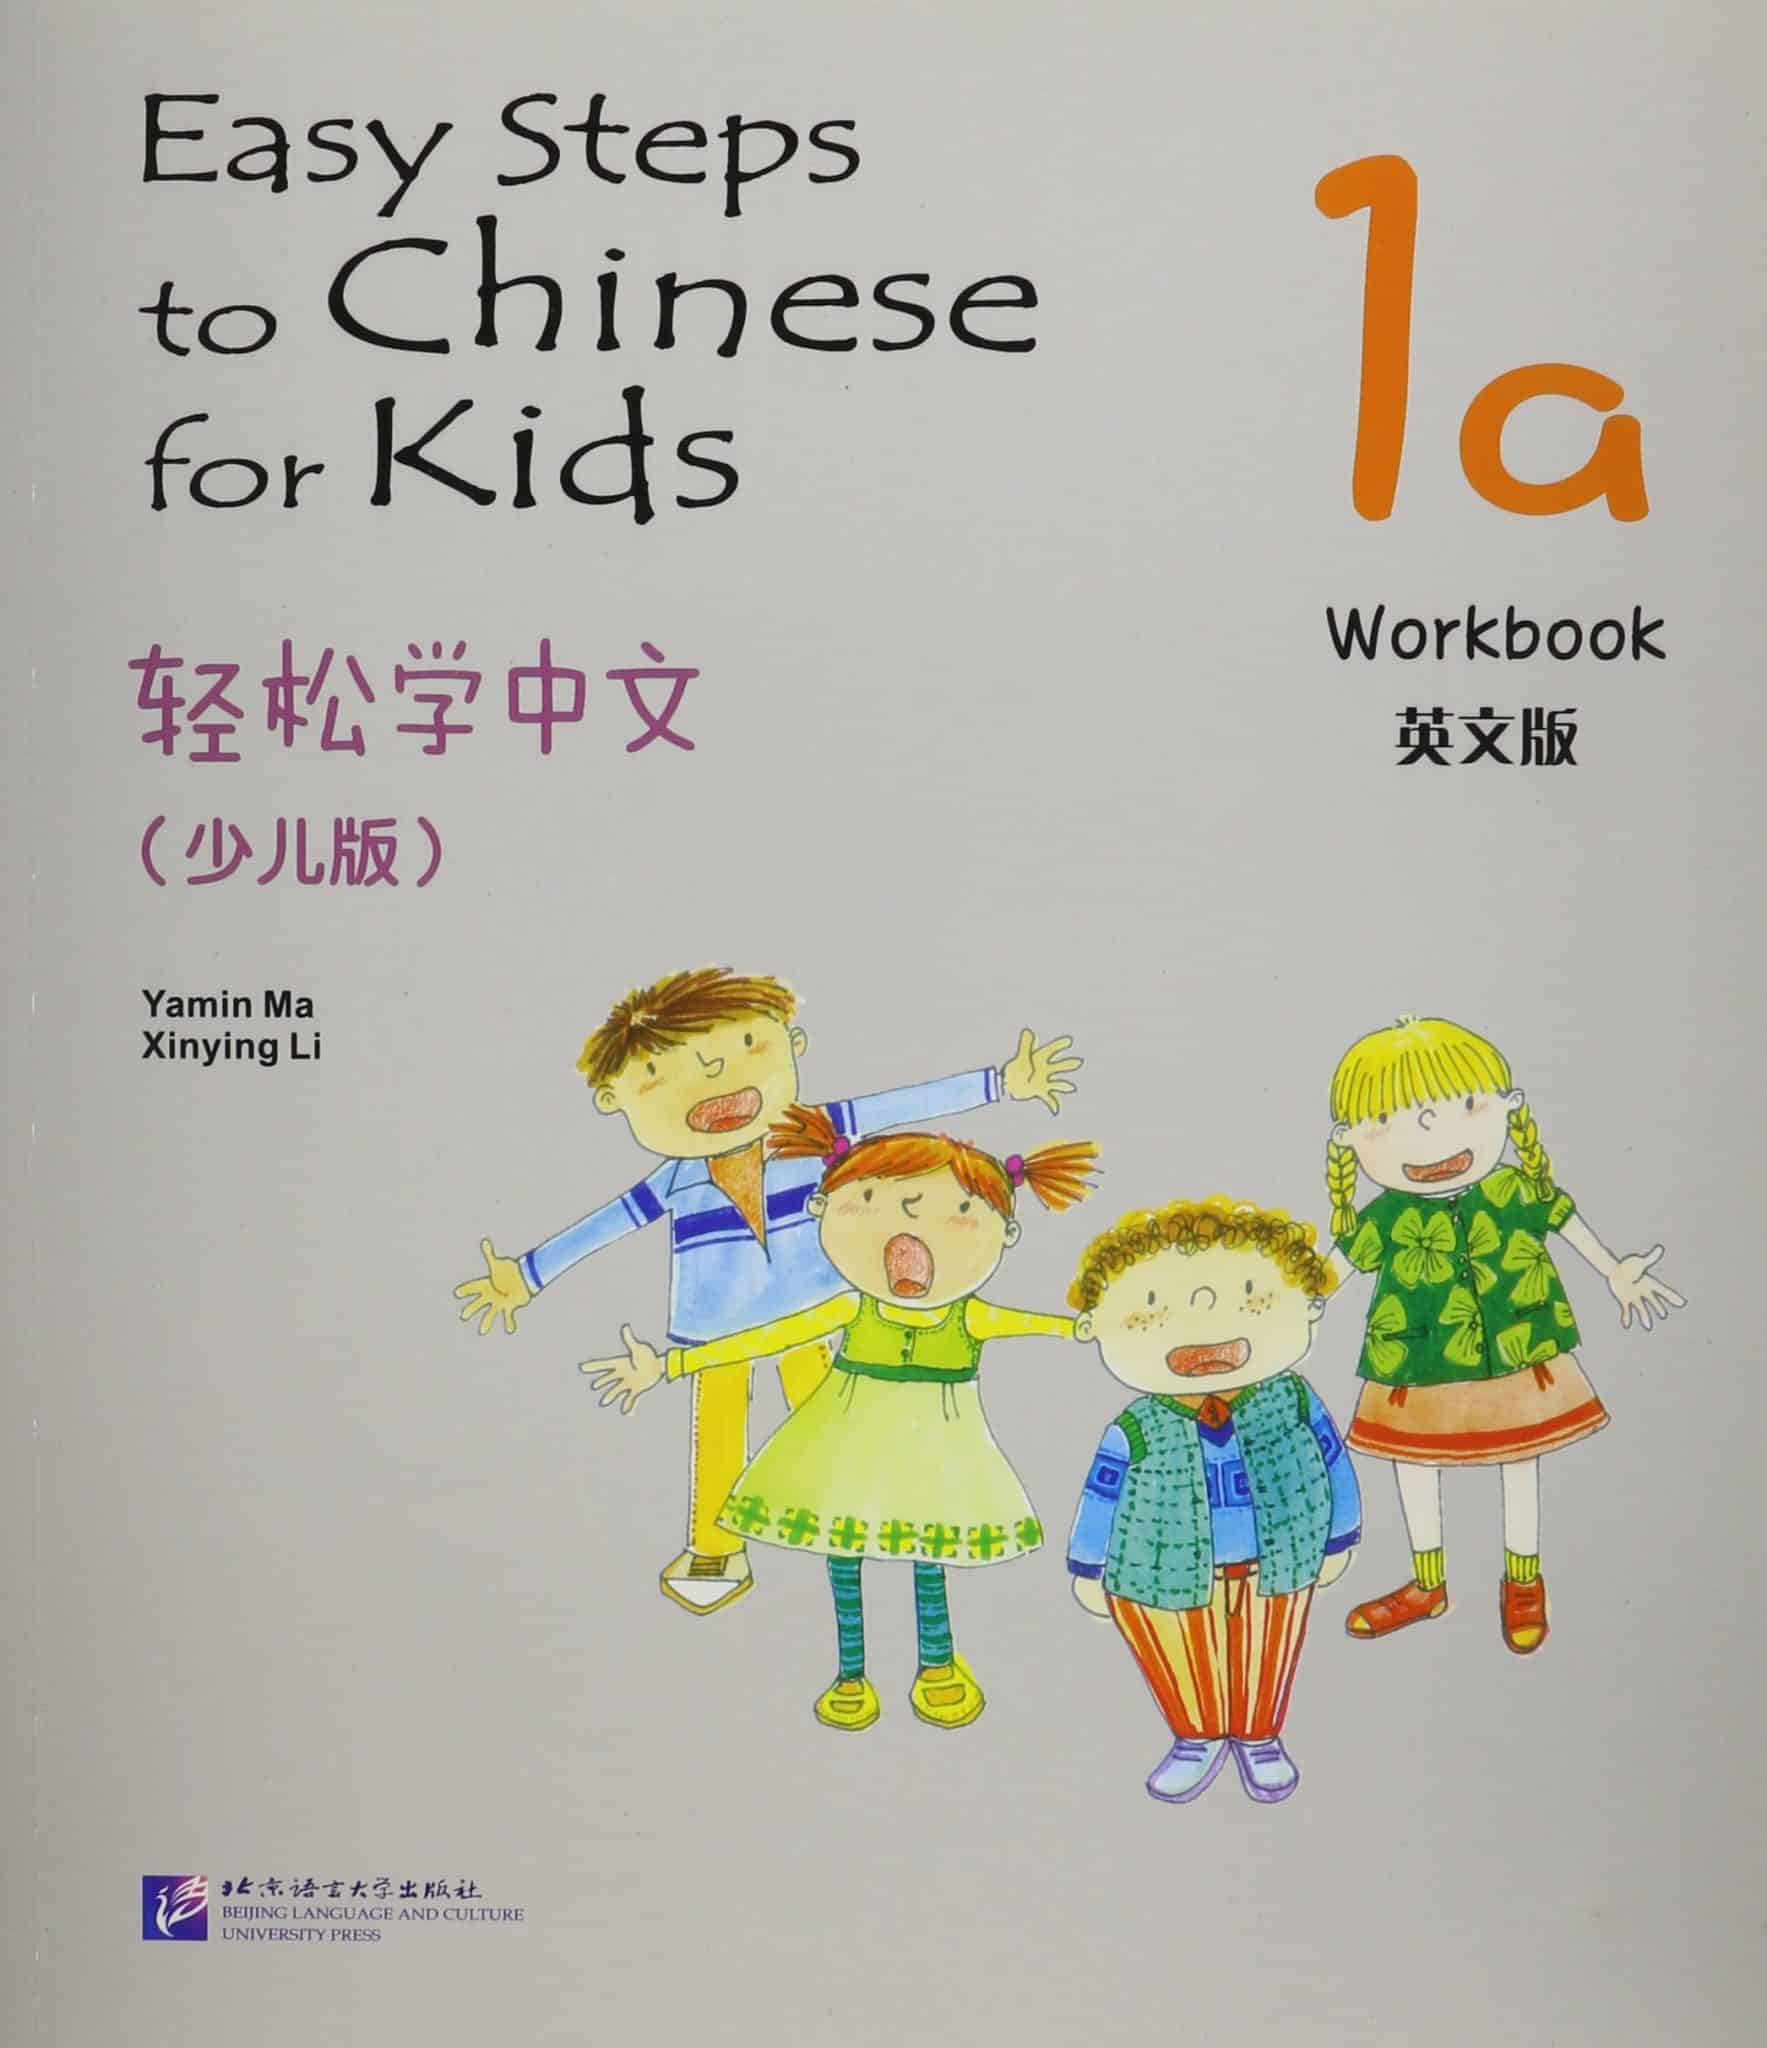 1a workbook scaled Khóa học tiếng Trung cho TRẺ EM